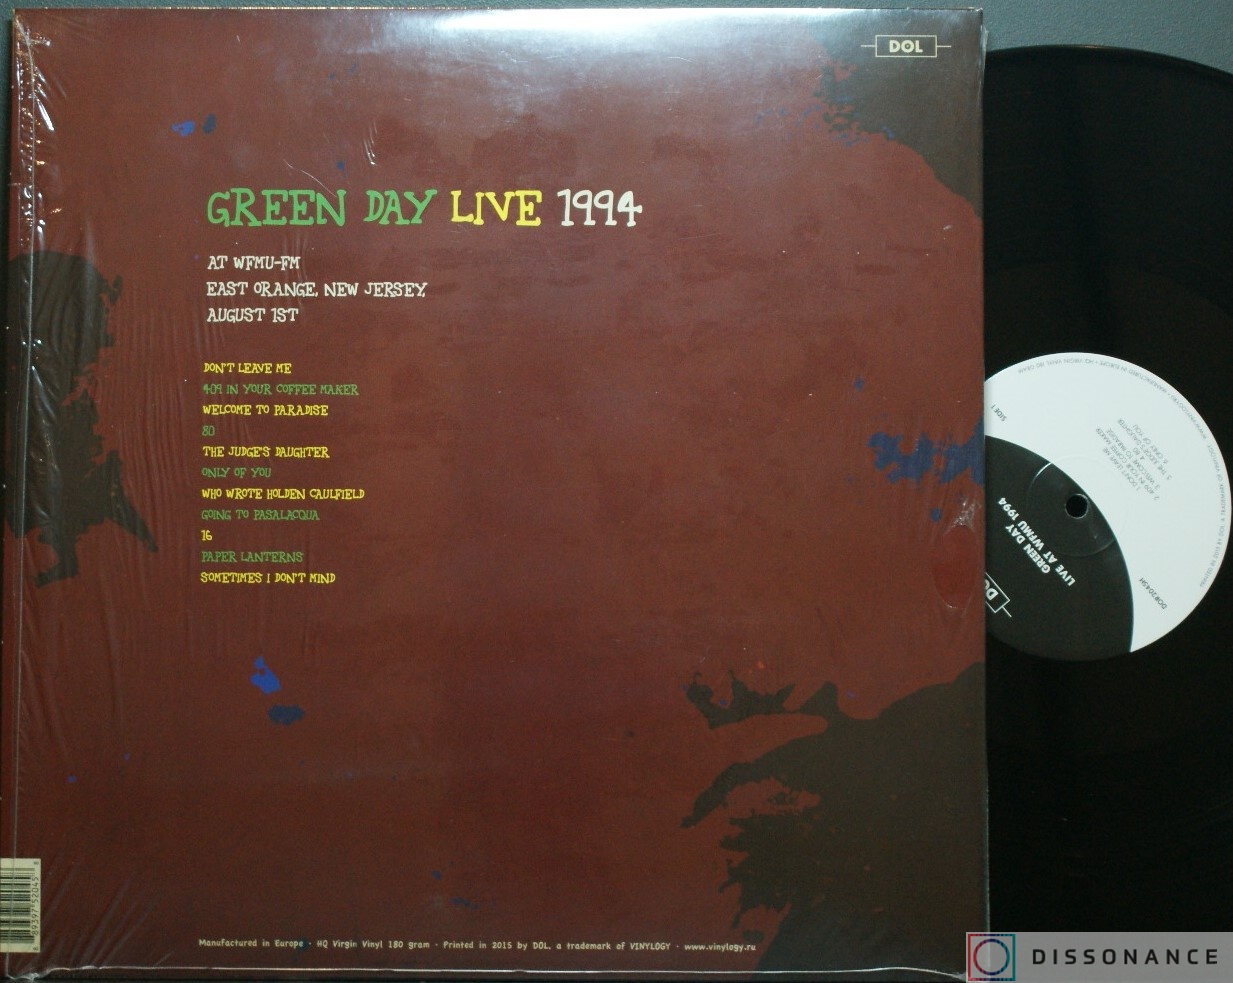 Виниловая пластинка Green Day - Live 1994 (1994) - фото 1